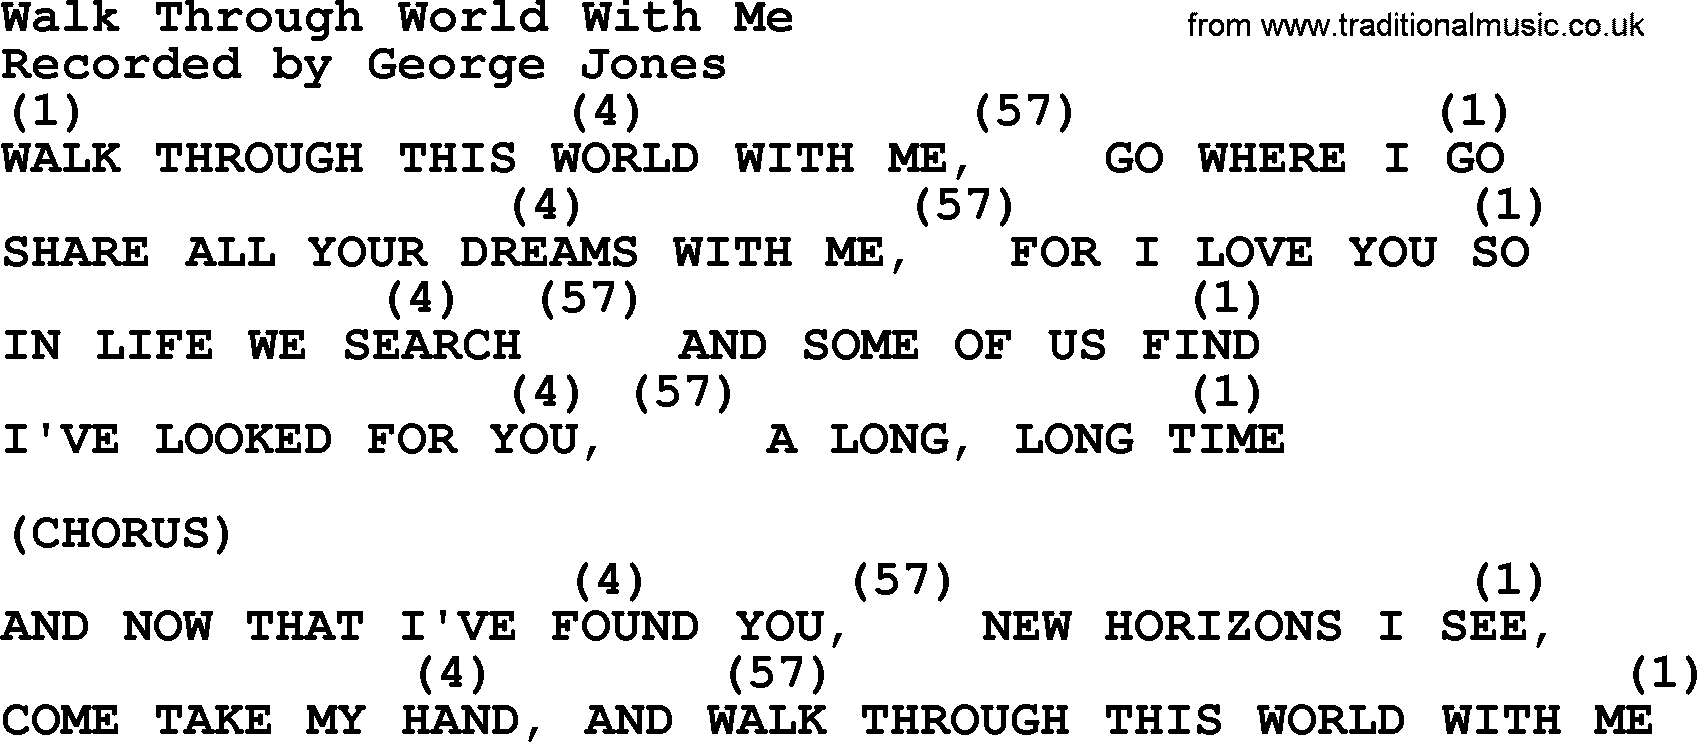 George Jones song: Walk Through World With Me, lyrics and chords